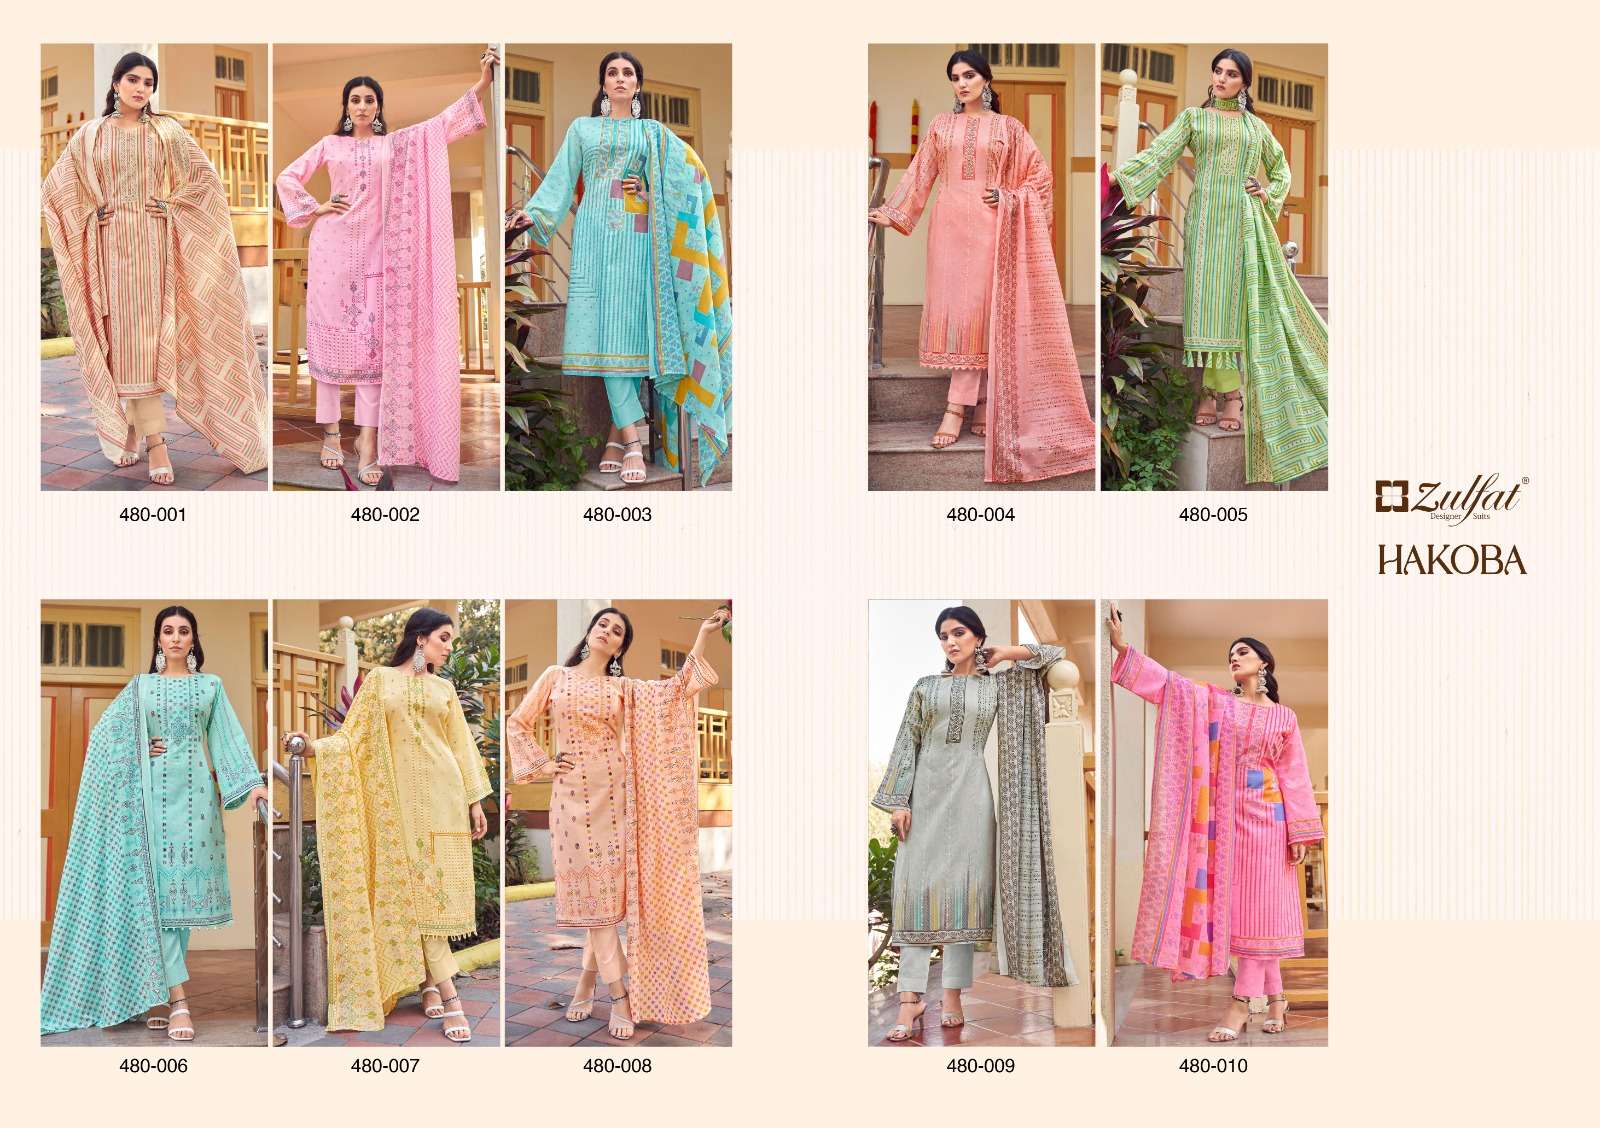 zulfat designer suits hakoba fancy designer salwar kameez catalogue online dealer surat 